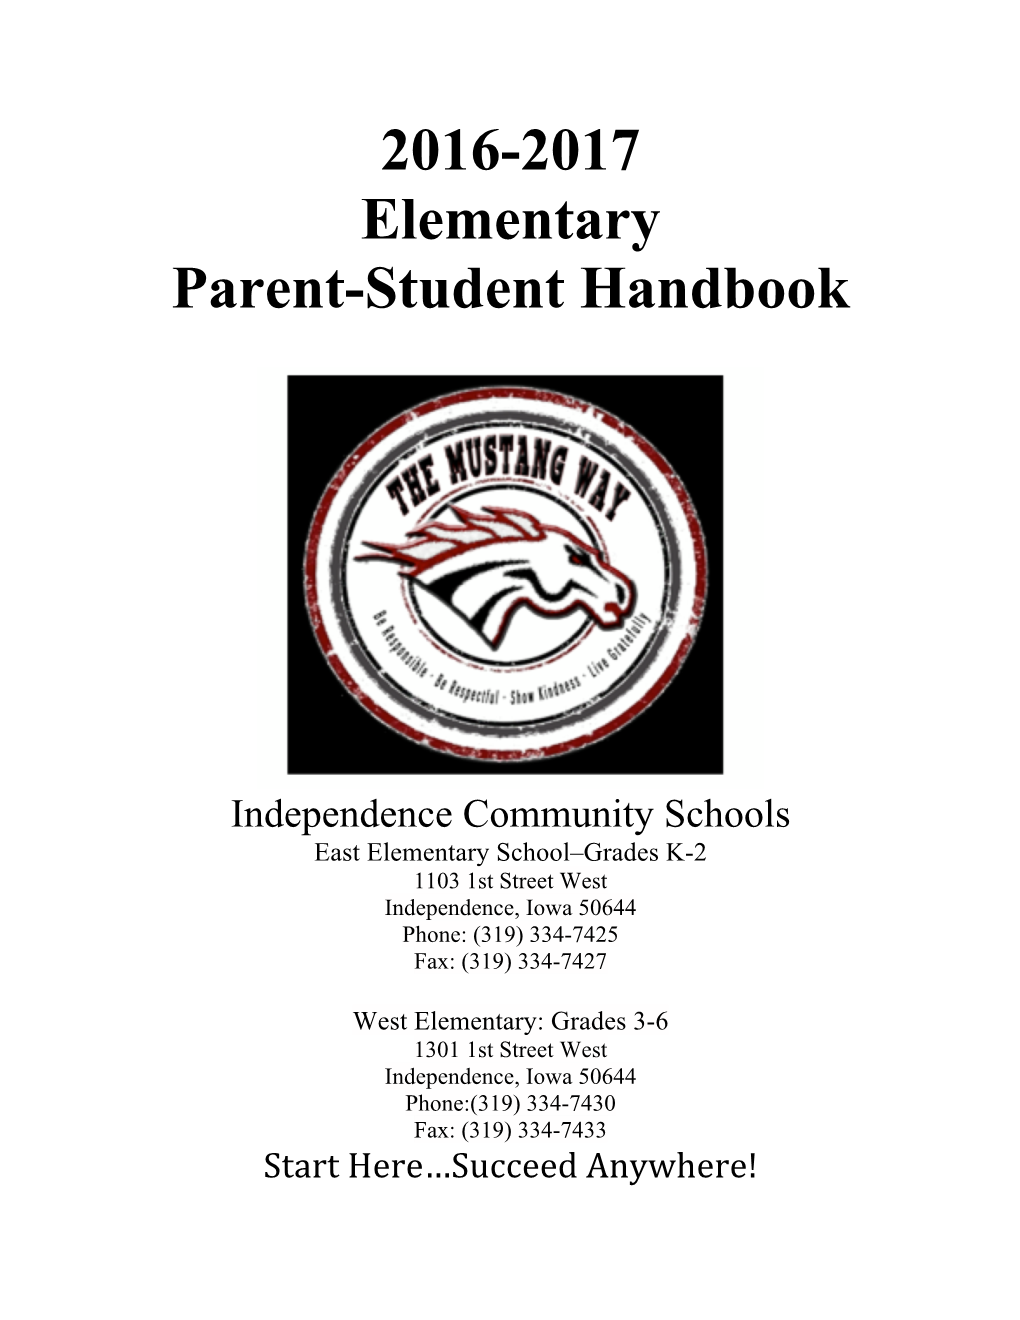 2016-2017 Elementary Parent-Student Handbook